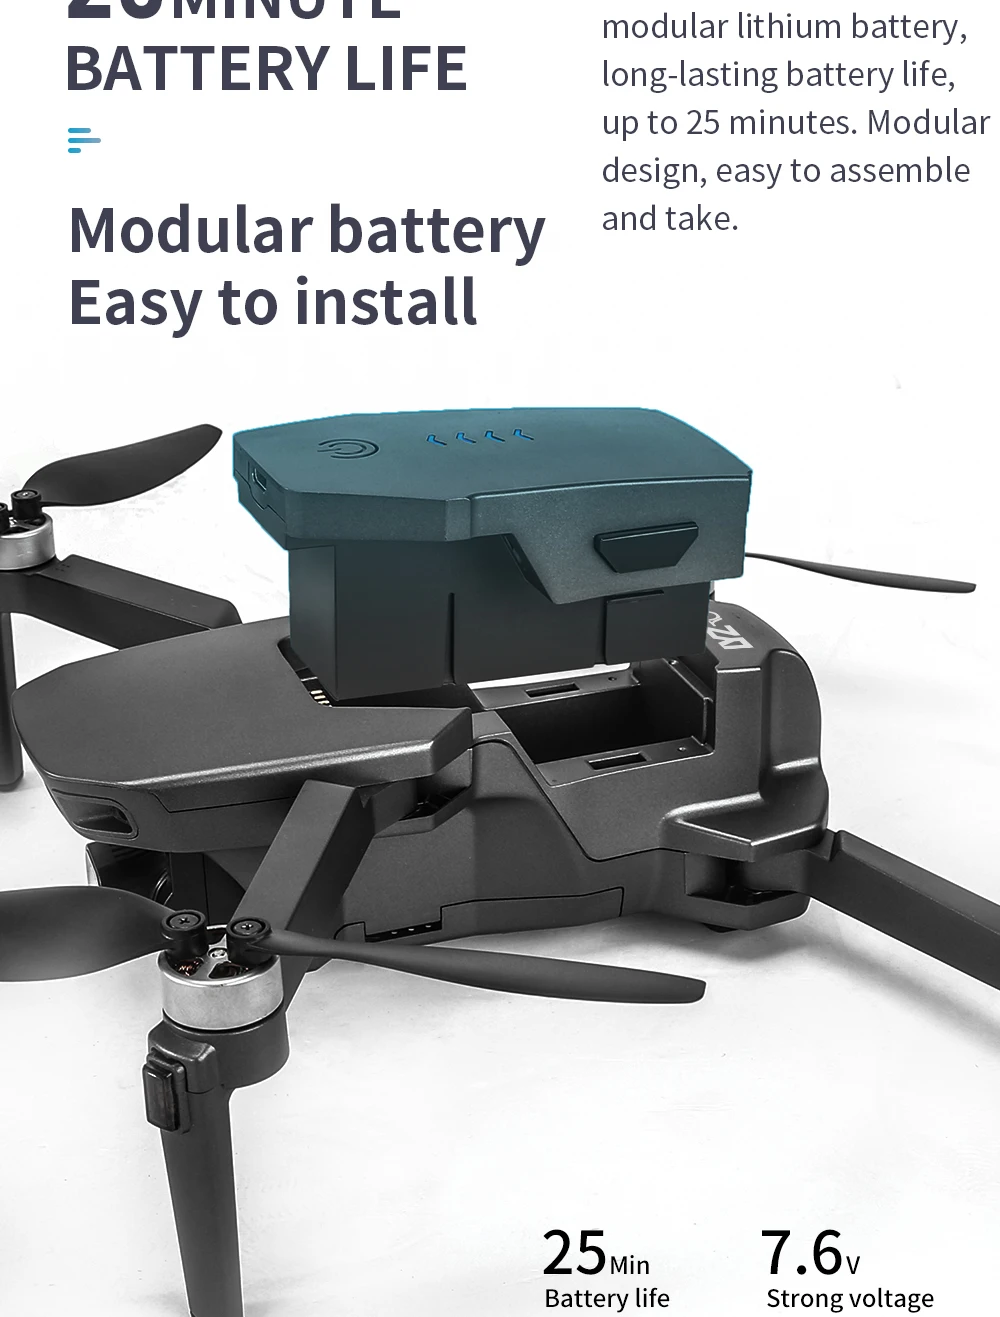 L300 GPS Drone, uin enen modular lithium battery, BATTERY LIFE long-lasting